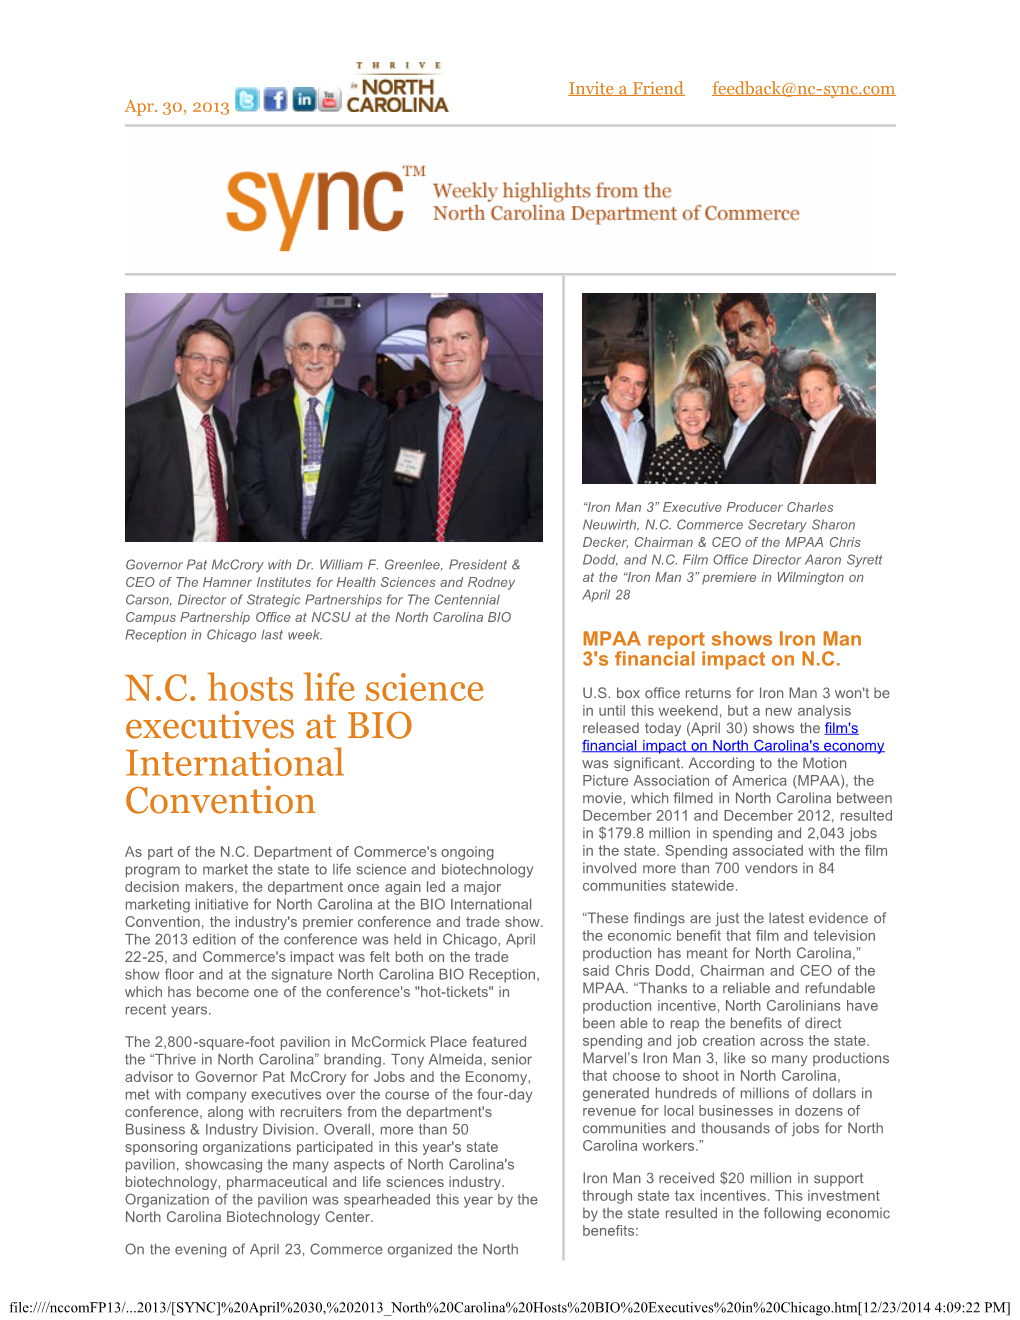 [SYNC] April 30, 2013 North Carolina Hosts B